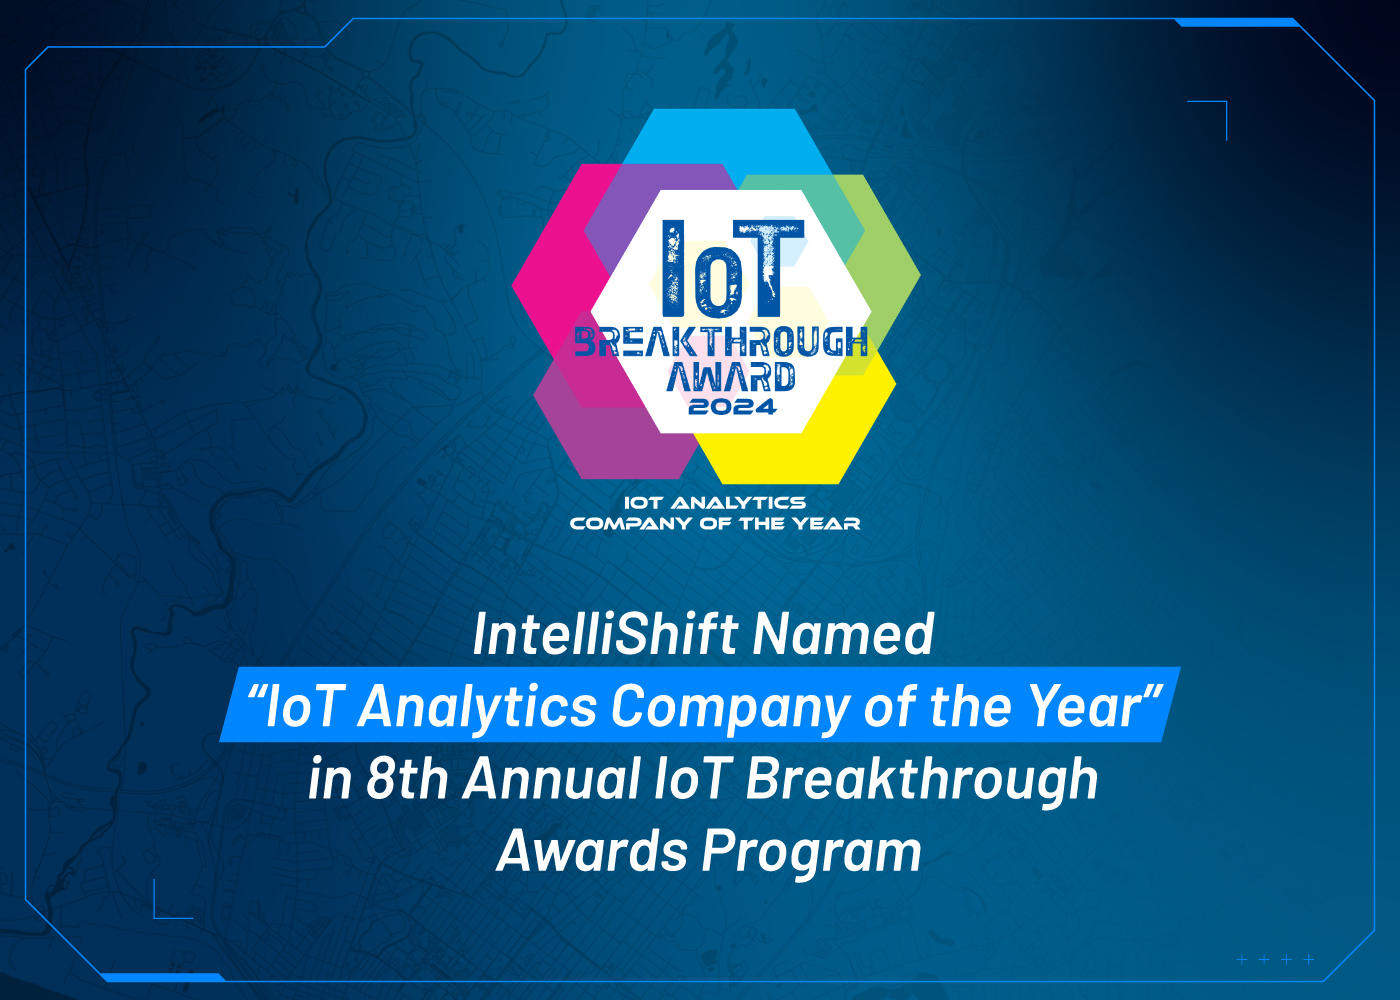 IntelliShift Named IoT Analytics Company of the Year